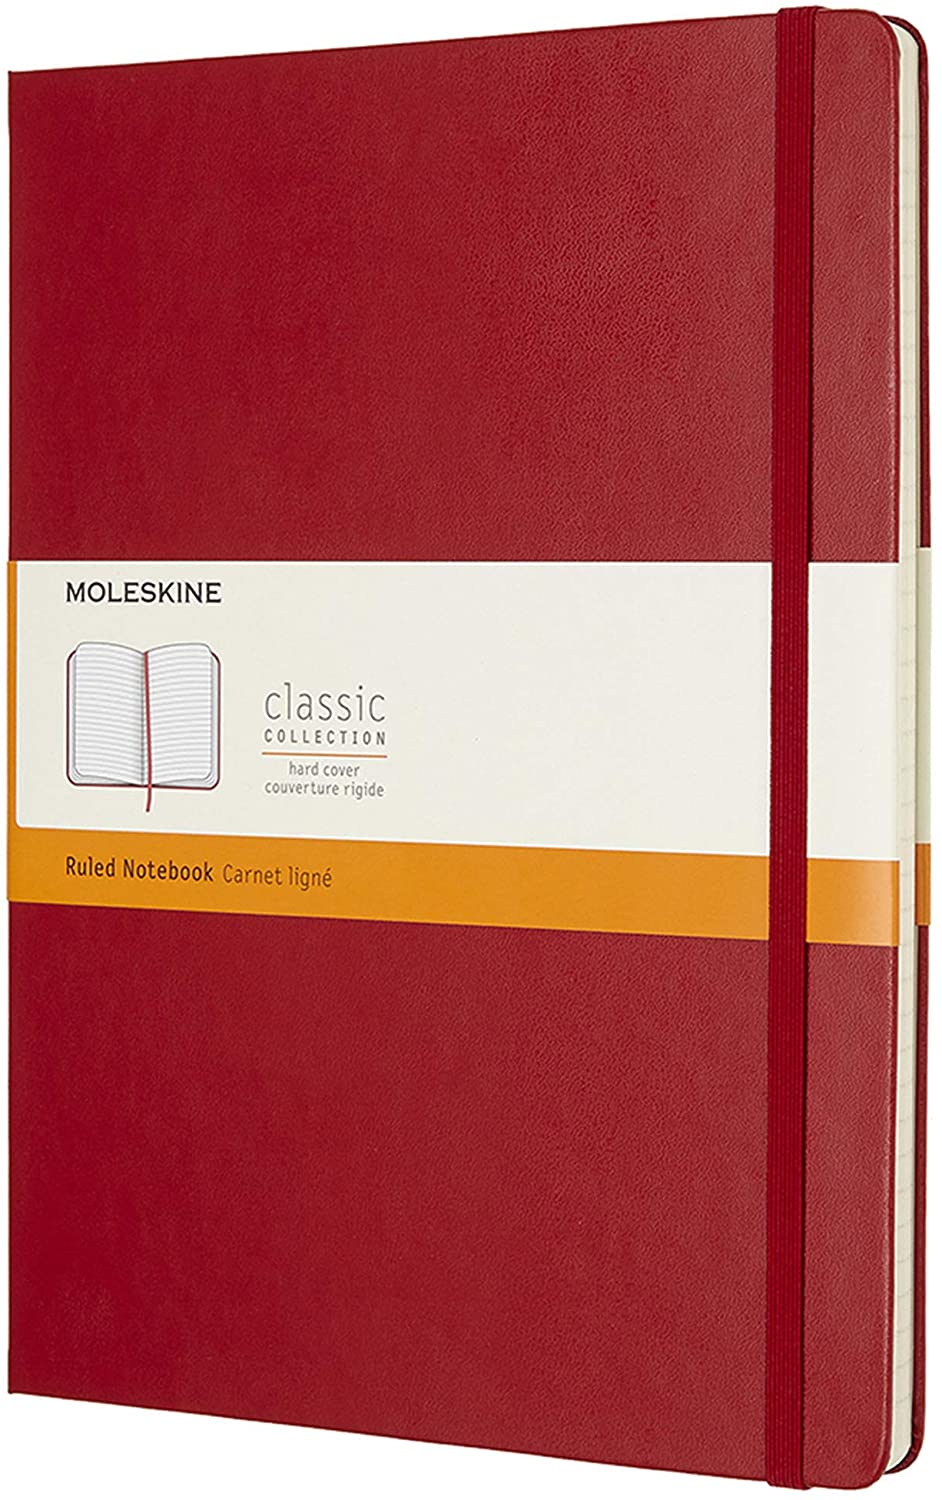 Carnet - Moleskine Classic - Hard Cover, X-Large, Ruled - Scarlet Red | Moleskine